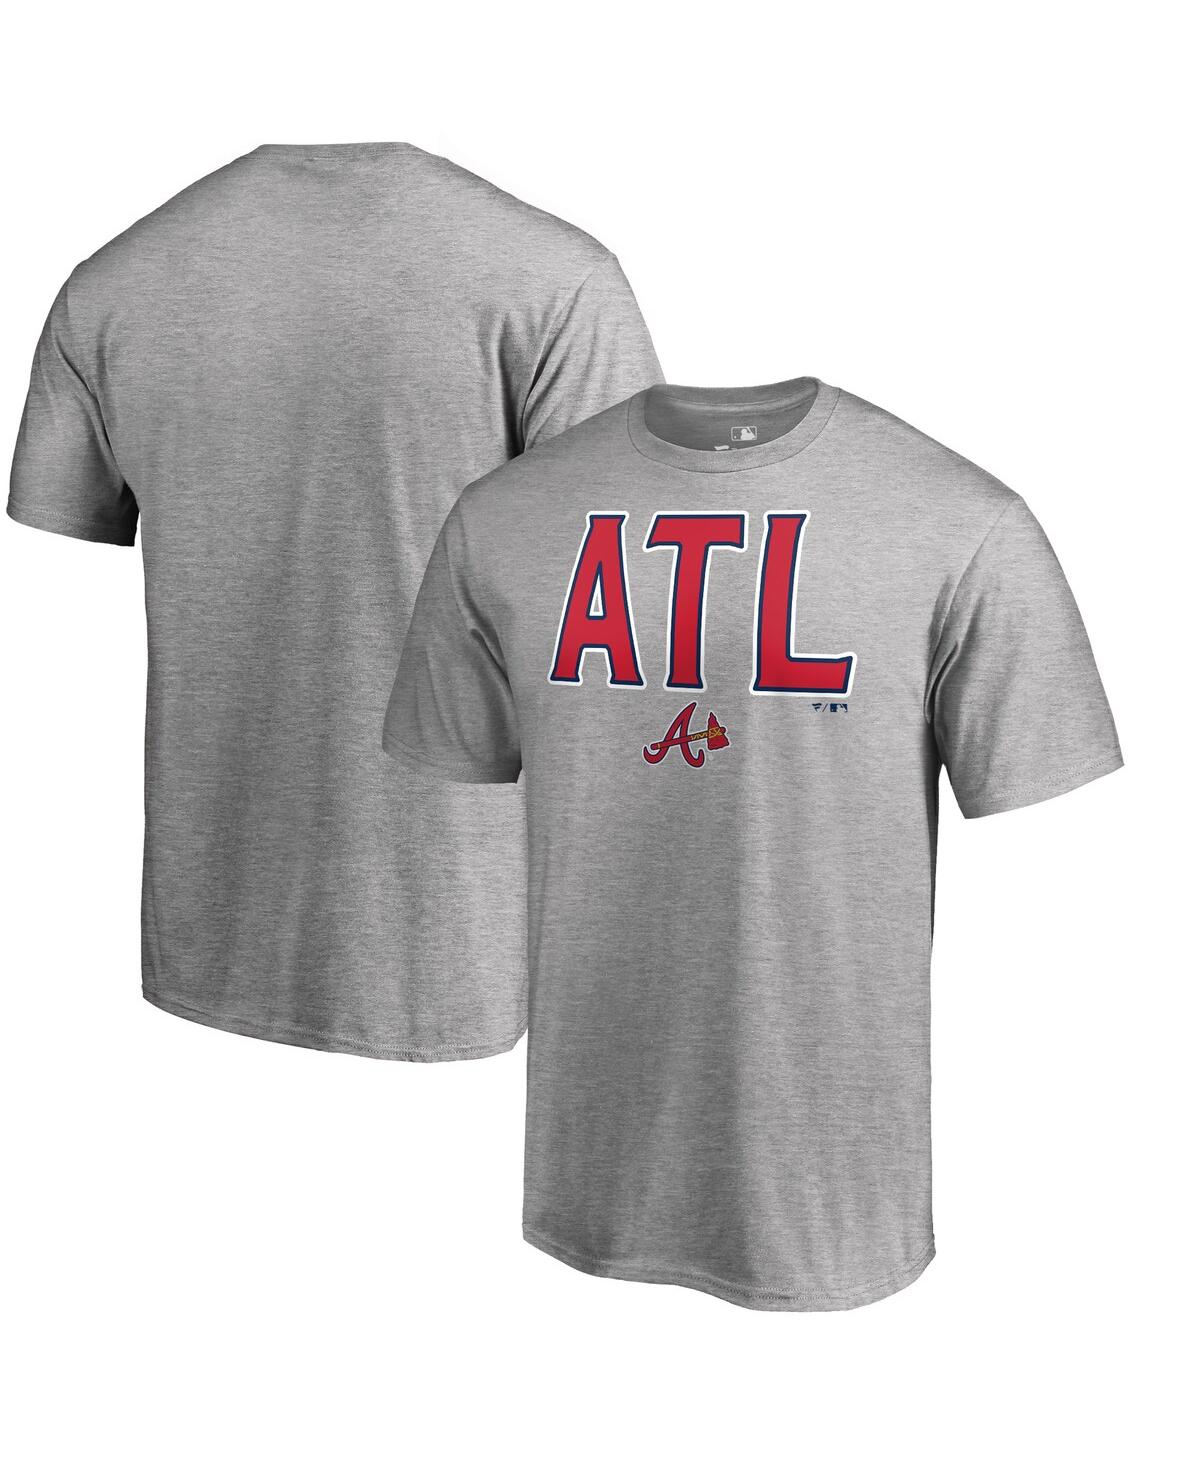 Fanatics Men's  Heather Gray Atlanta Braves Hometown Atl T-shirt